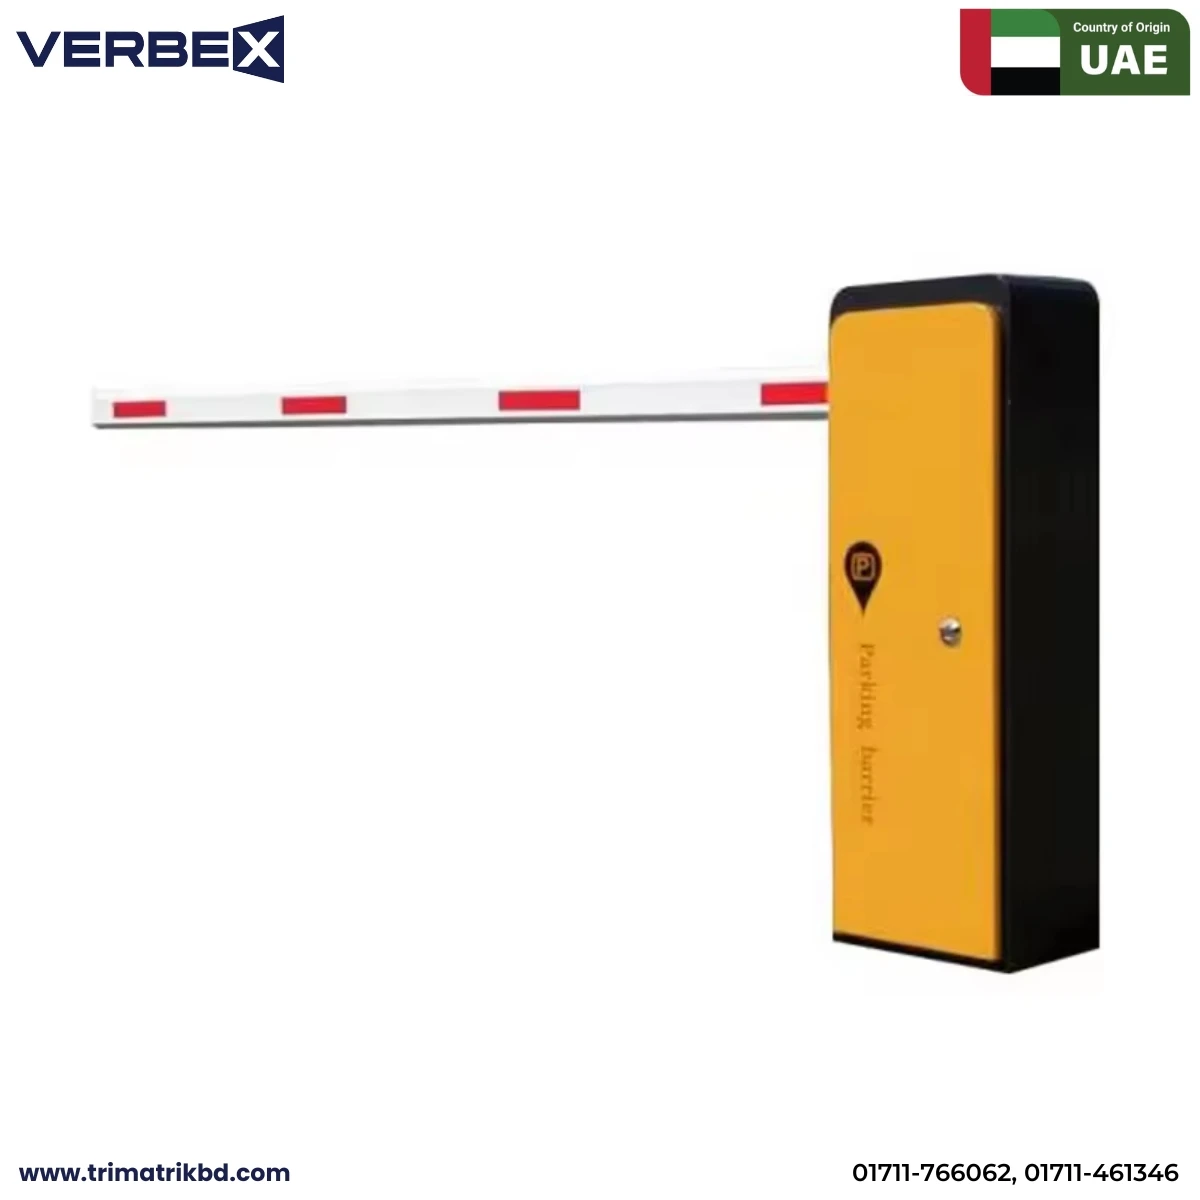 Verbex VTS-BJ100 Road Traffic Parking Lot Automatic Boom 3M/4.5M/6M Parking Barrier